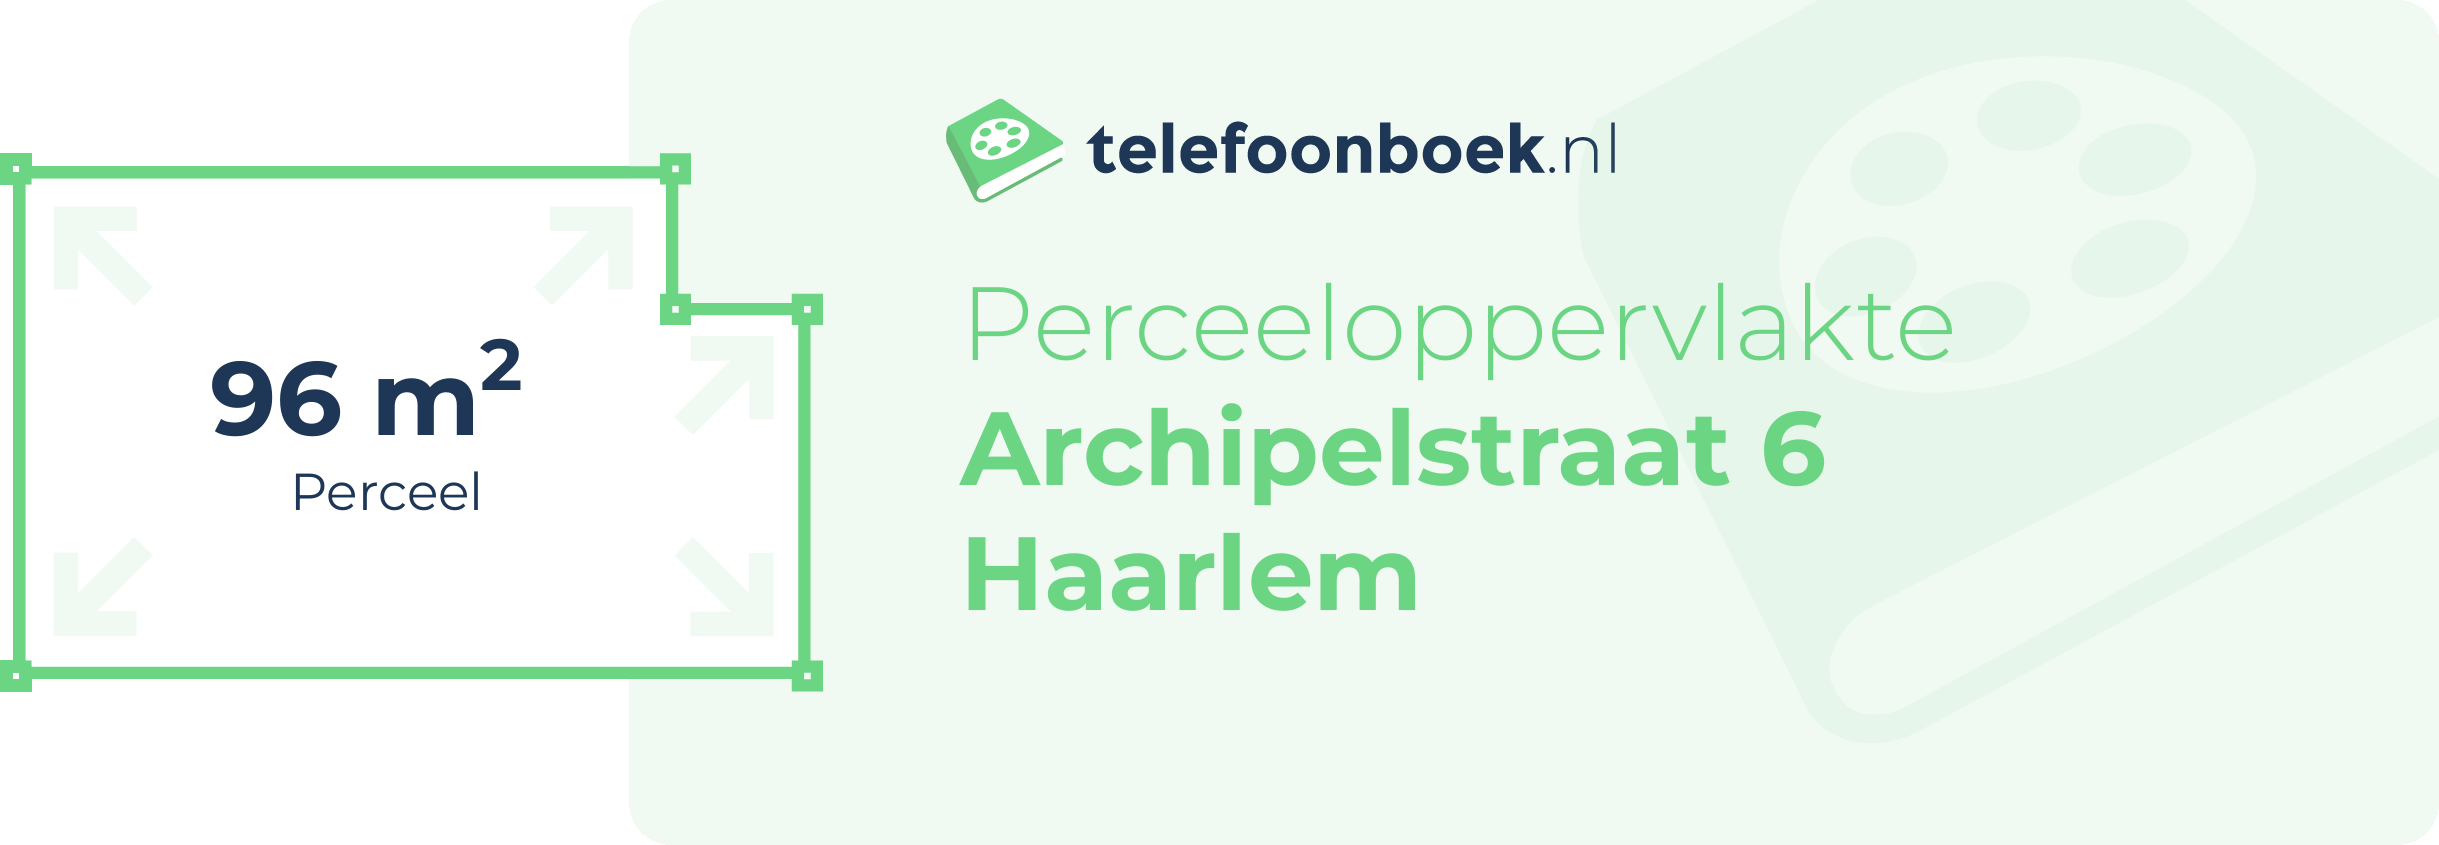 Perceeloppervlakte Archipelstraat 6 Haarlem